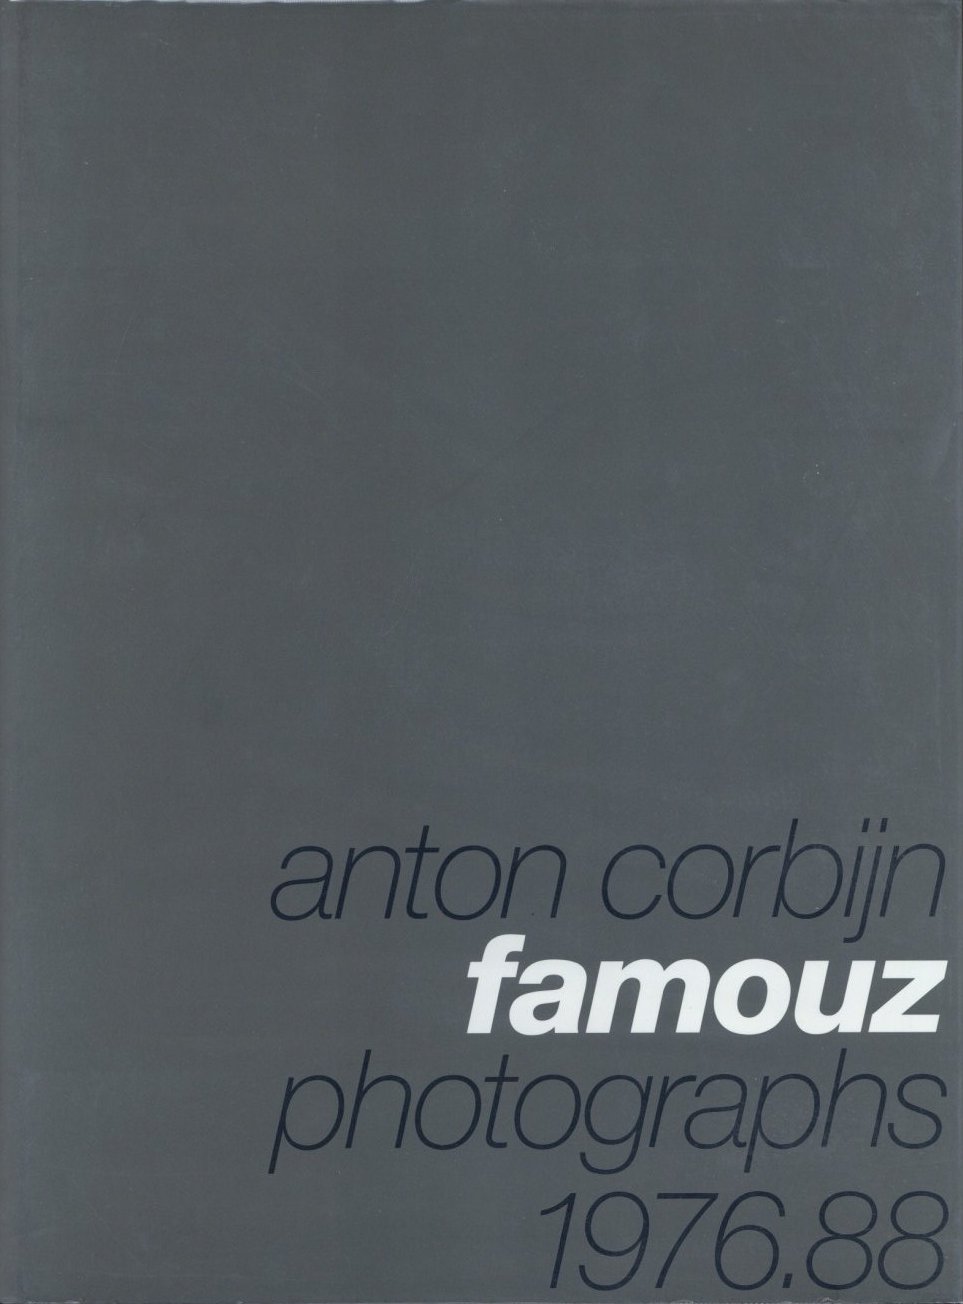 Anton Corbijn: Famouz Photographs 1976.88 / Photo: Anton Corbijn 